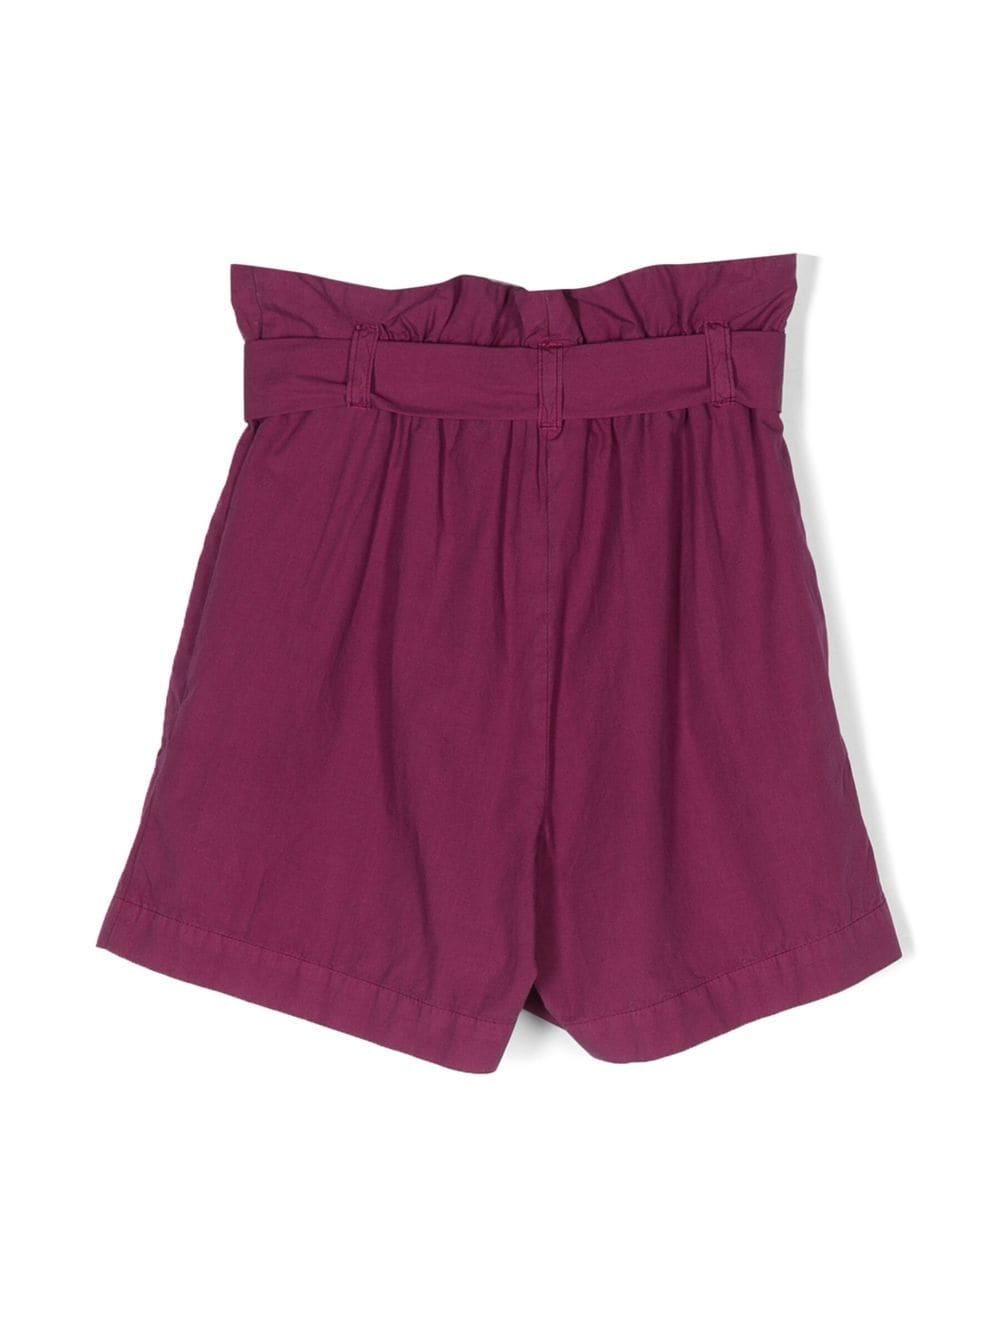 pantaloncini con arricciature in vita - Rubino Kids